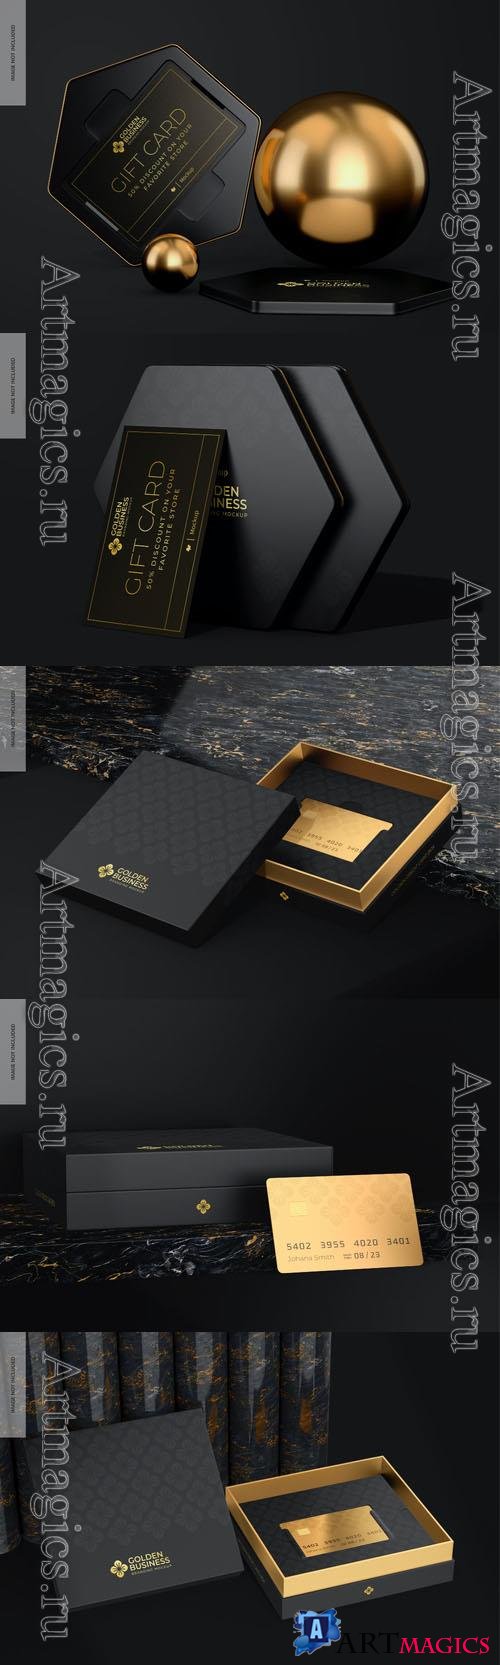 Golden credit card box psd template mockup design